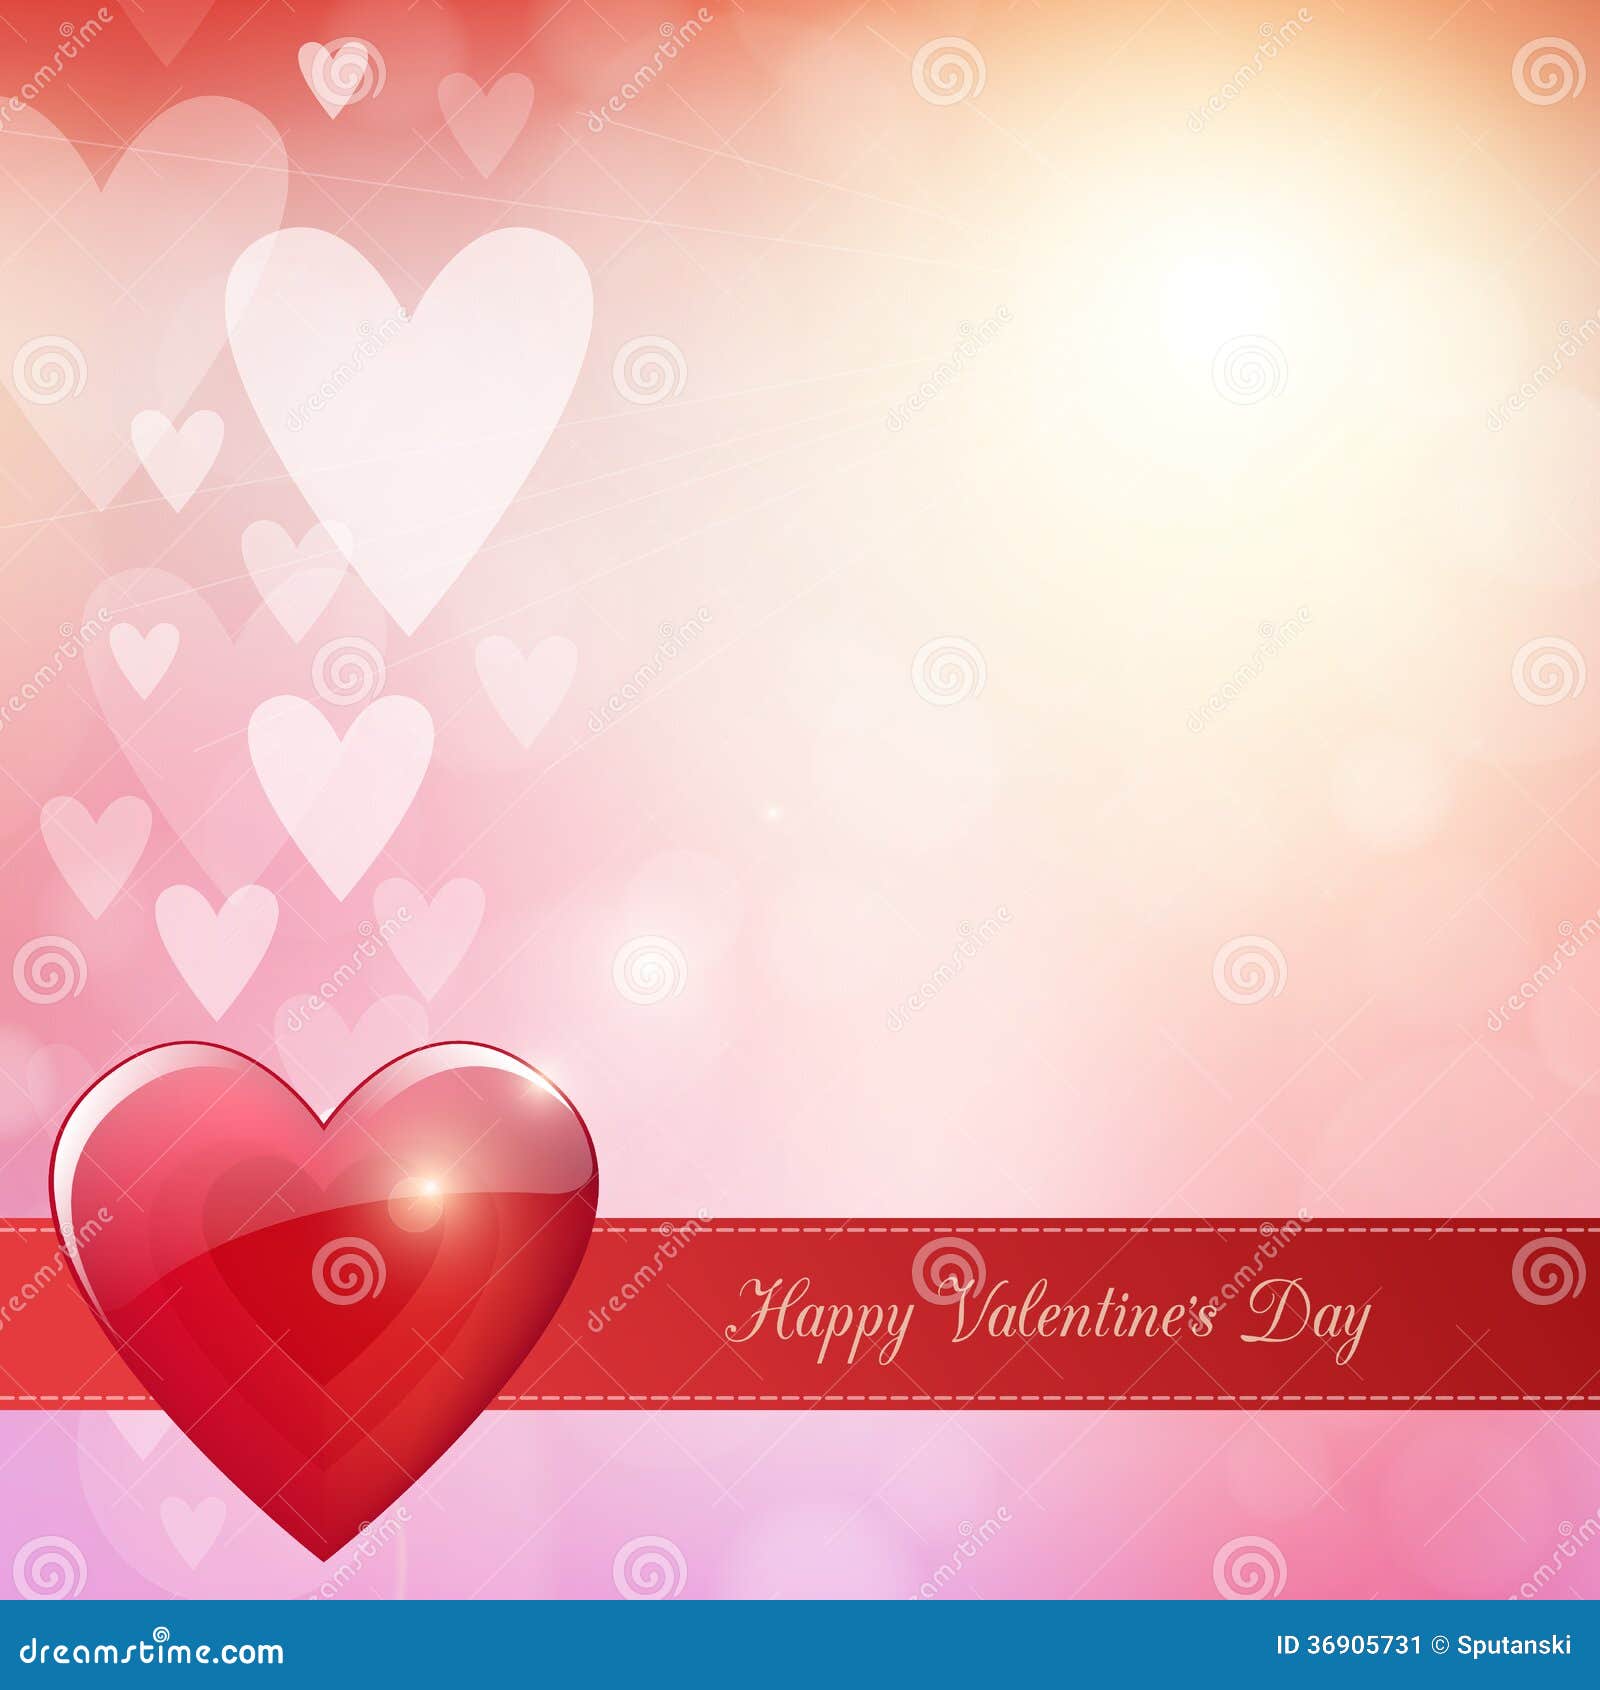 Valentine S Day Bright Poster Stock Vector - Illustration of purple,  romantic: 36905731